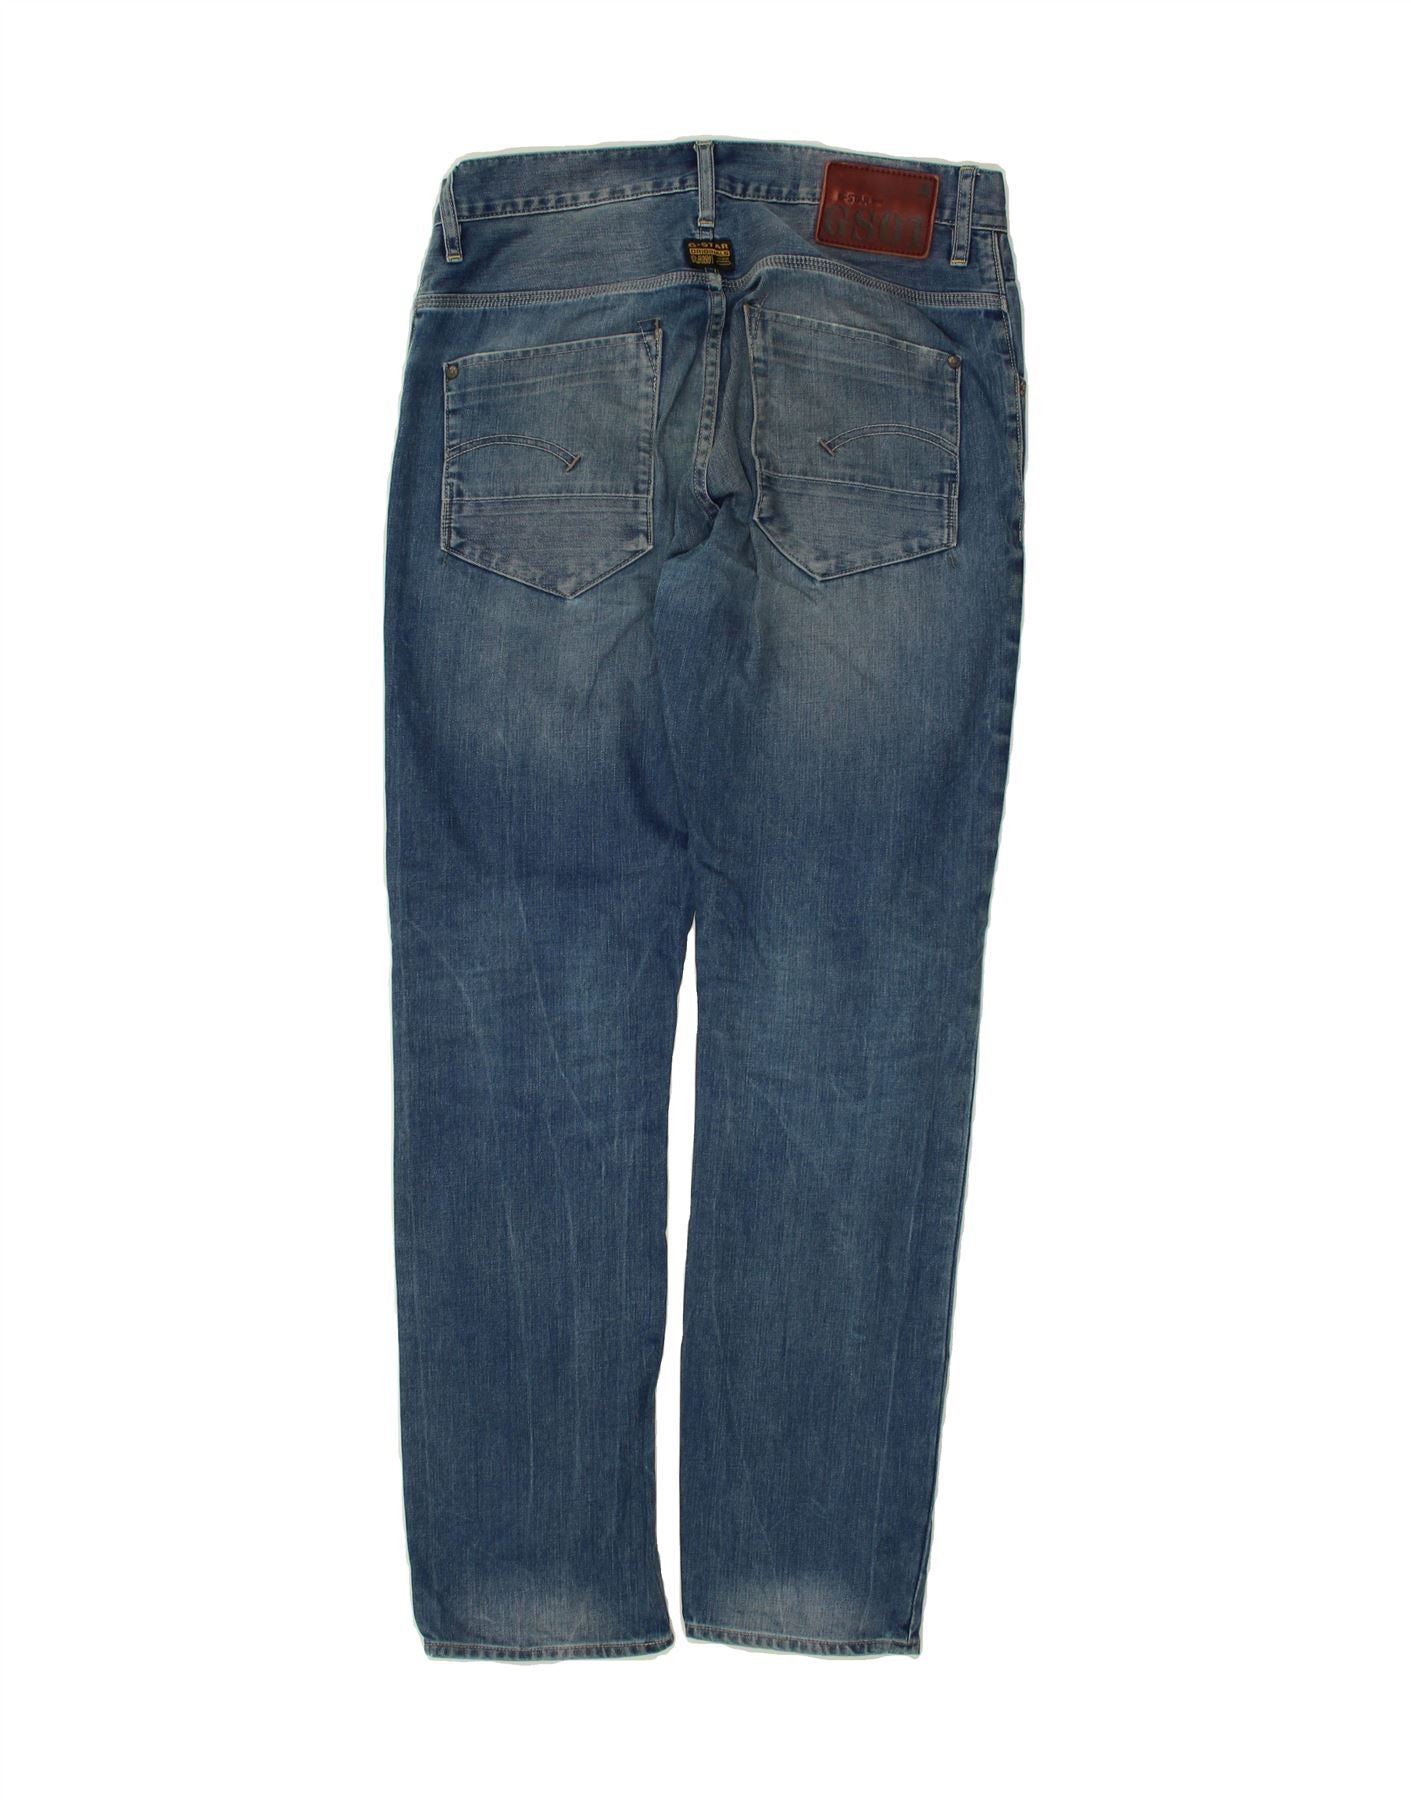 G-STAR 男士修身牛仔裤 W32 L30 蓝色 | |在线复古及二手服装|旧货店